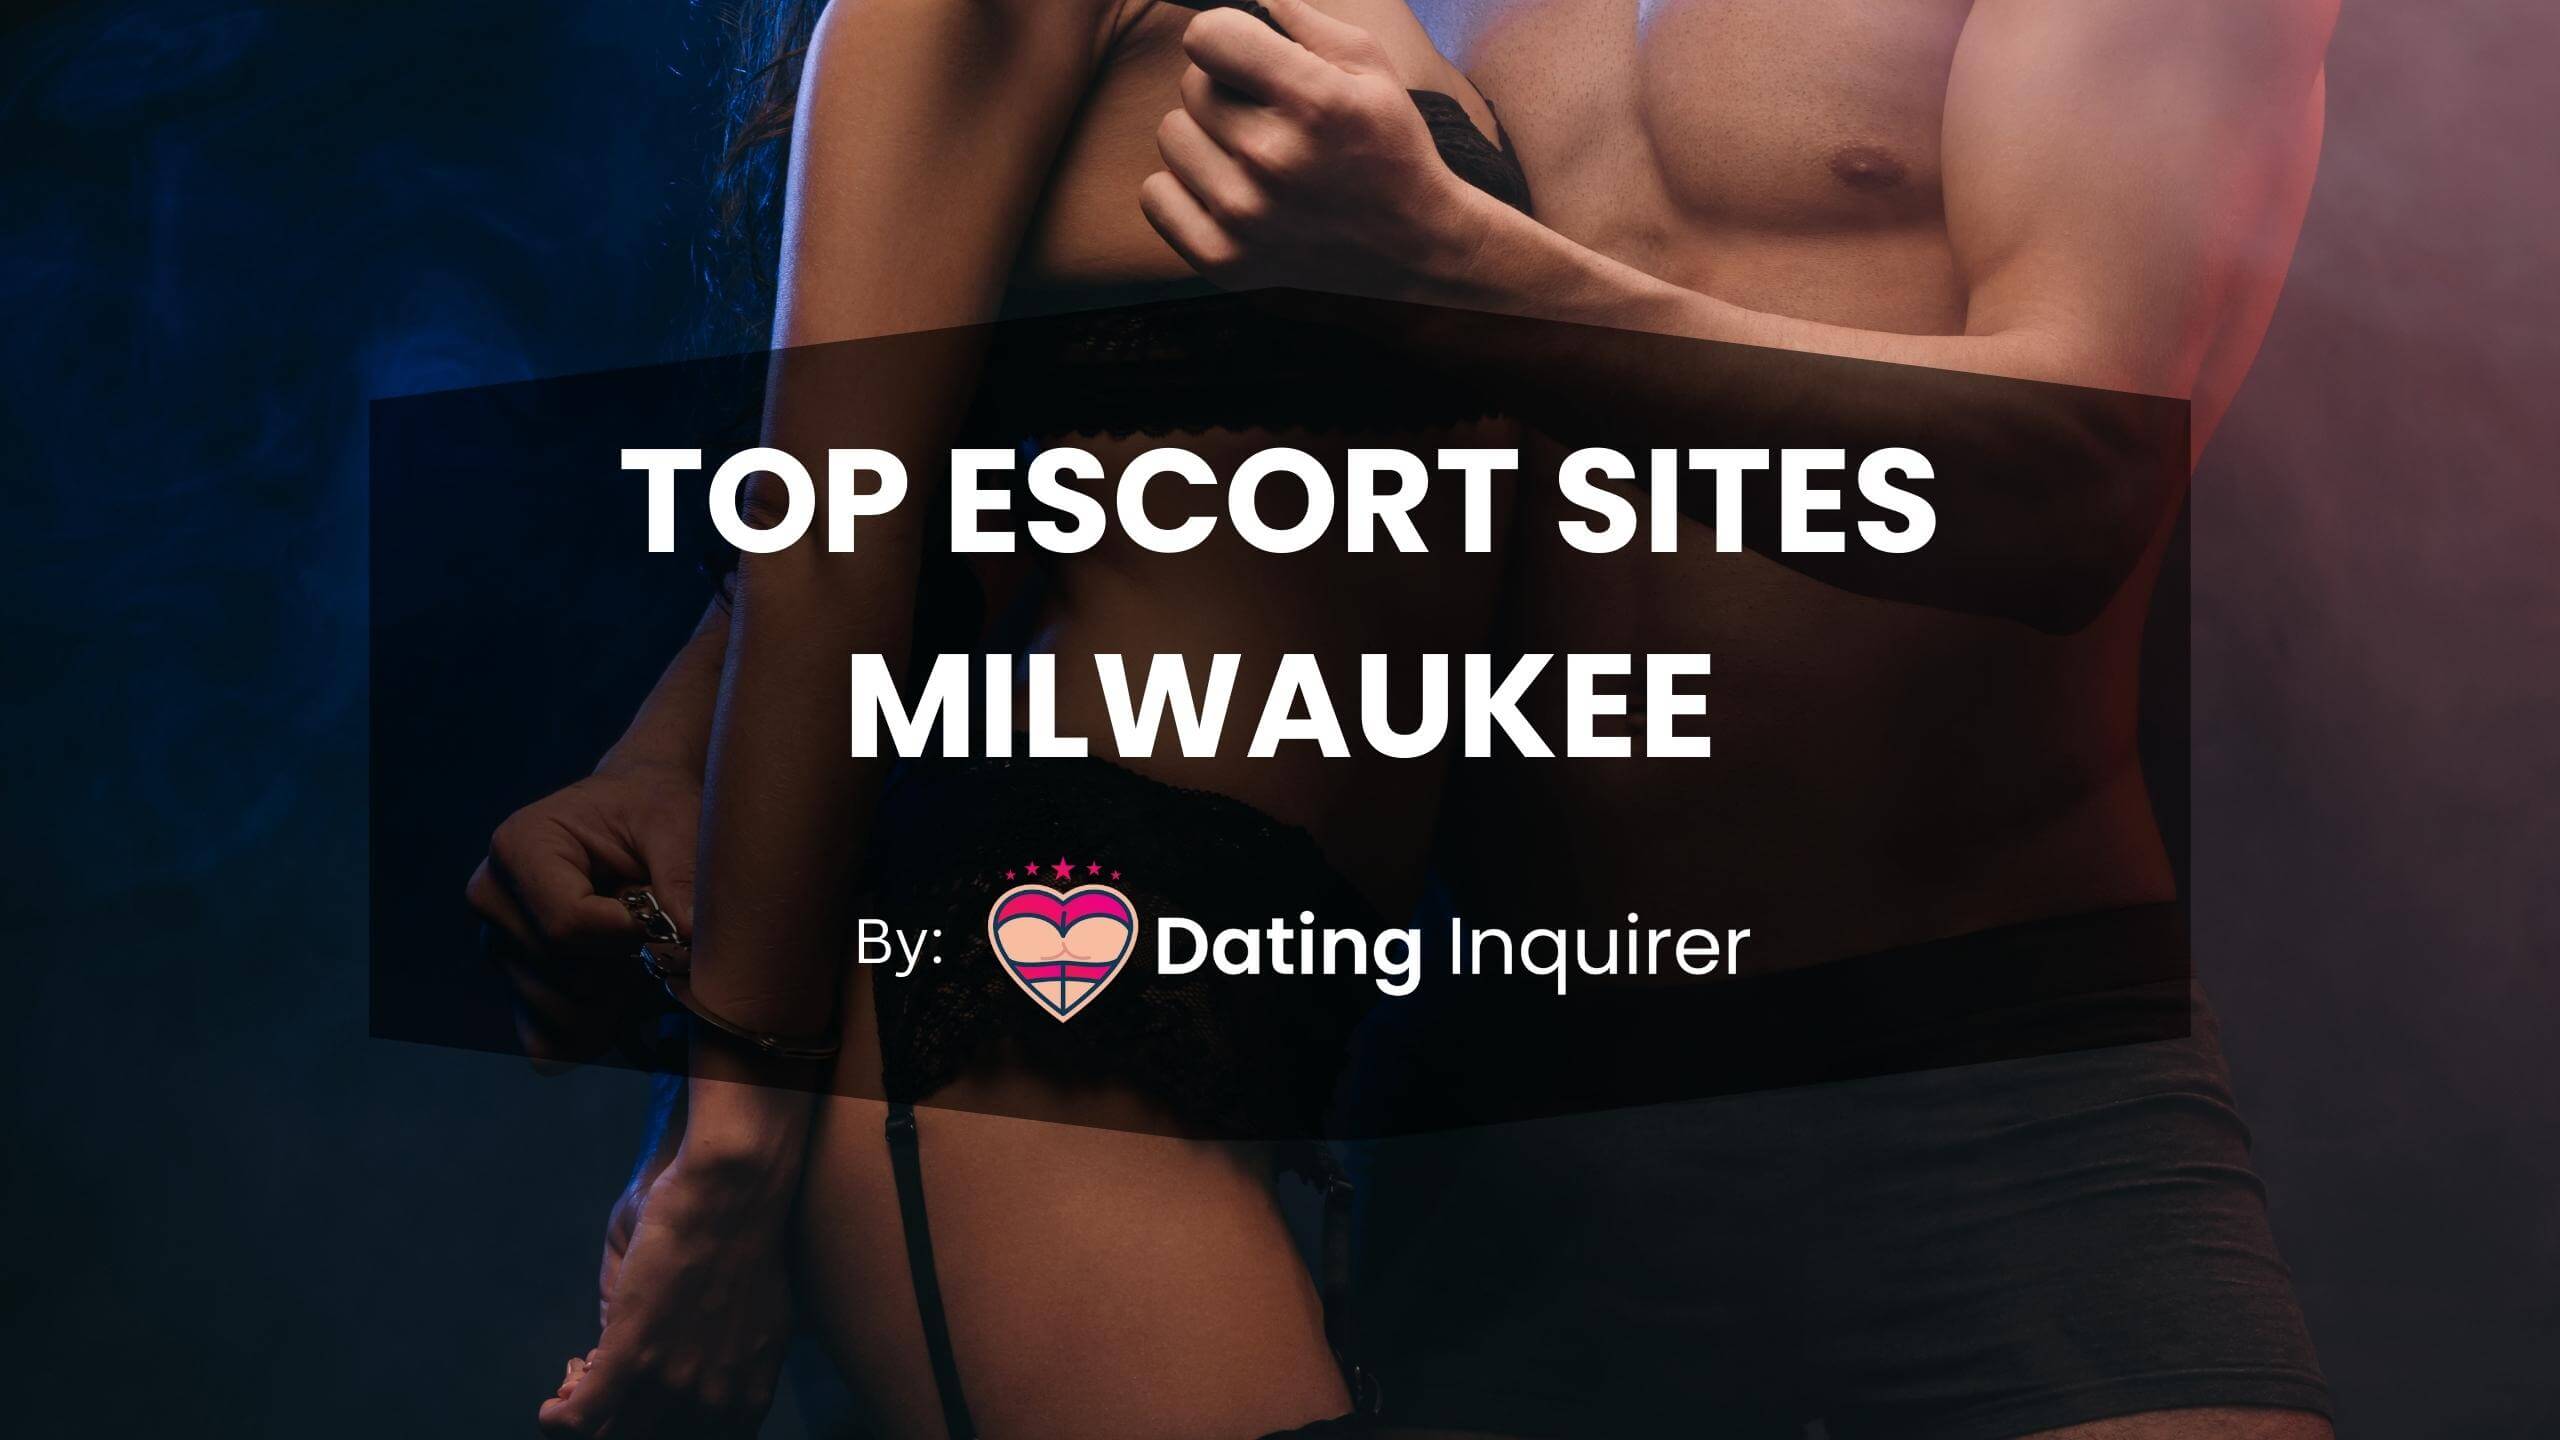 top escort sites milwaukee cover